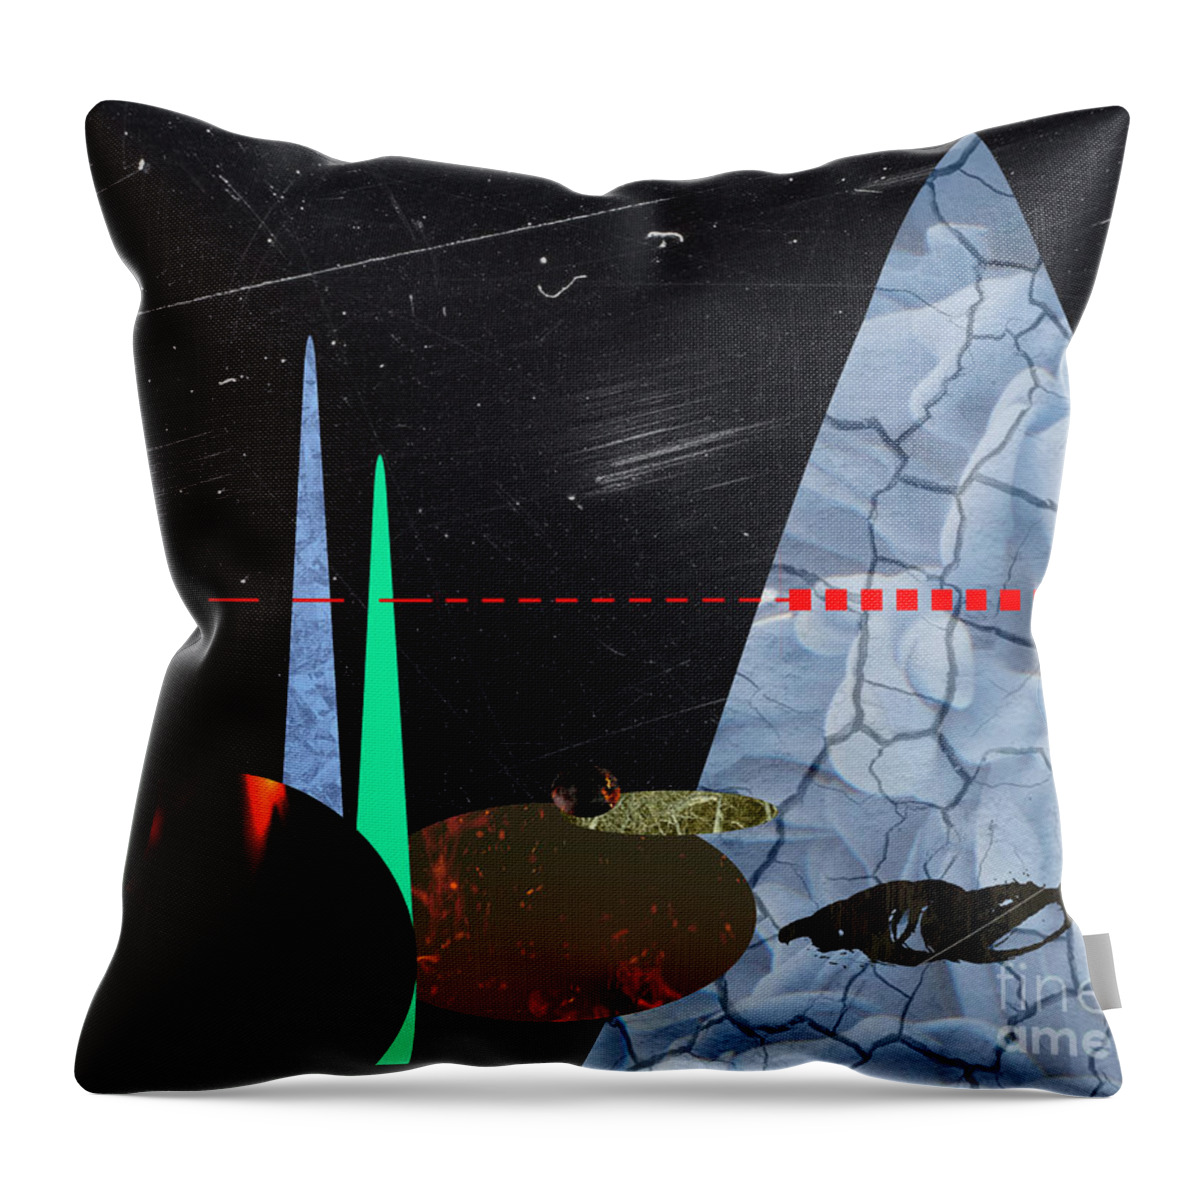 Resistance Throw Pillow featuring the digital art Resistance by Diamante Lavendar